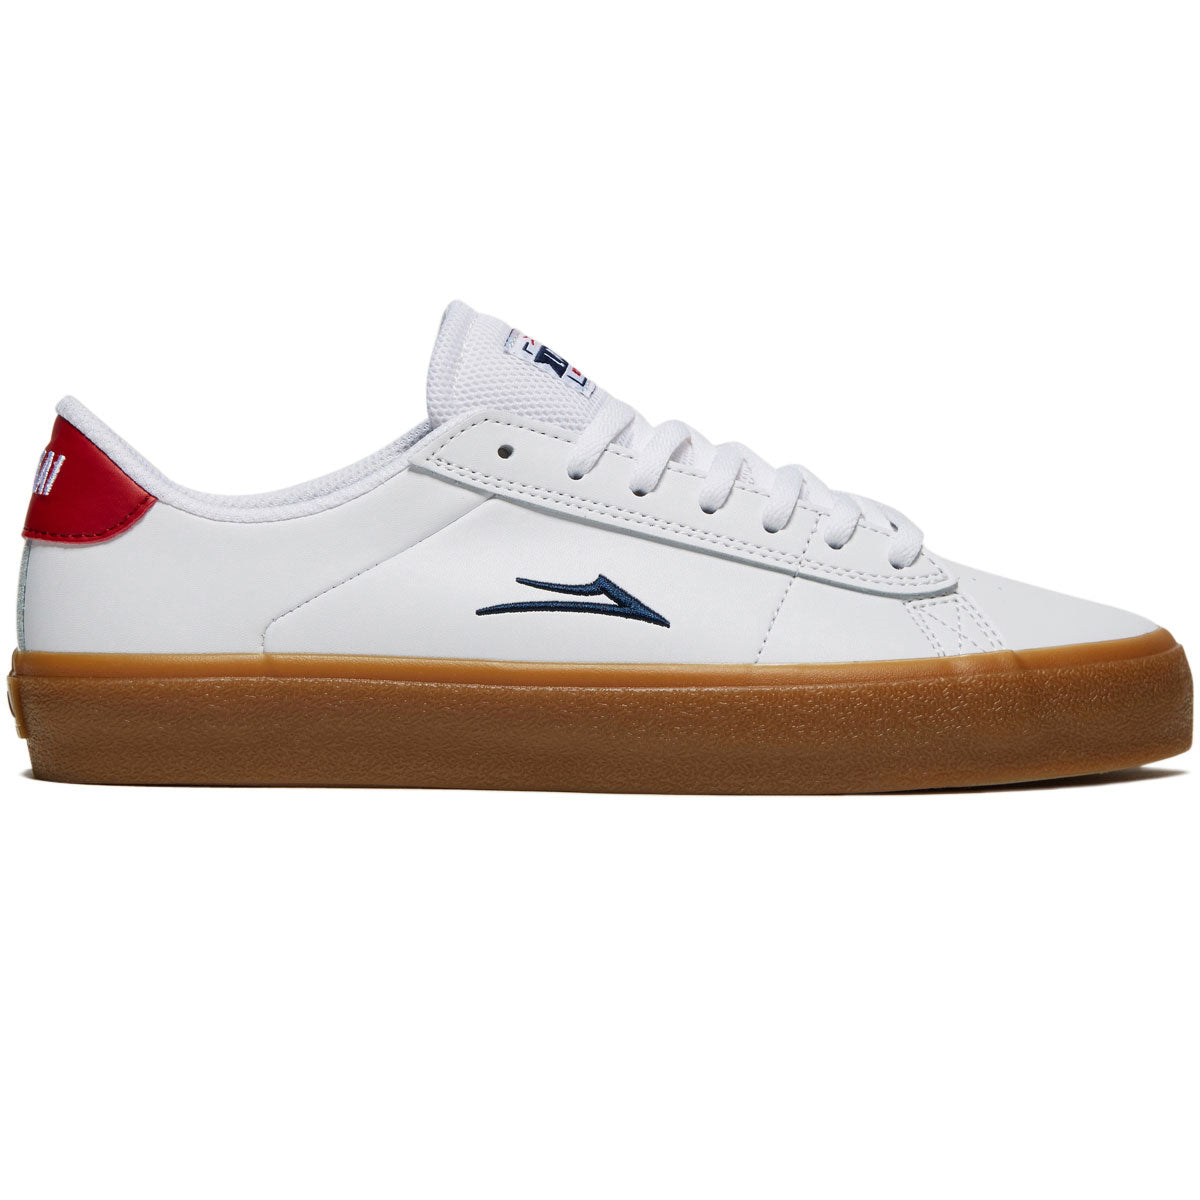 Lakai Newport Shoes - White/Gum Leather image 1